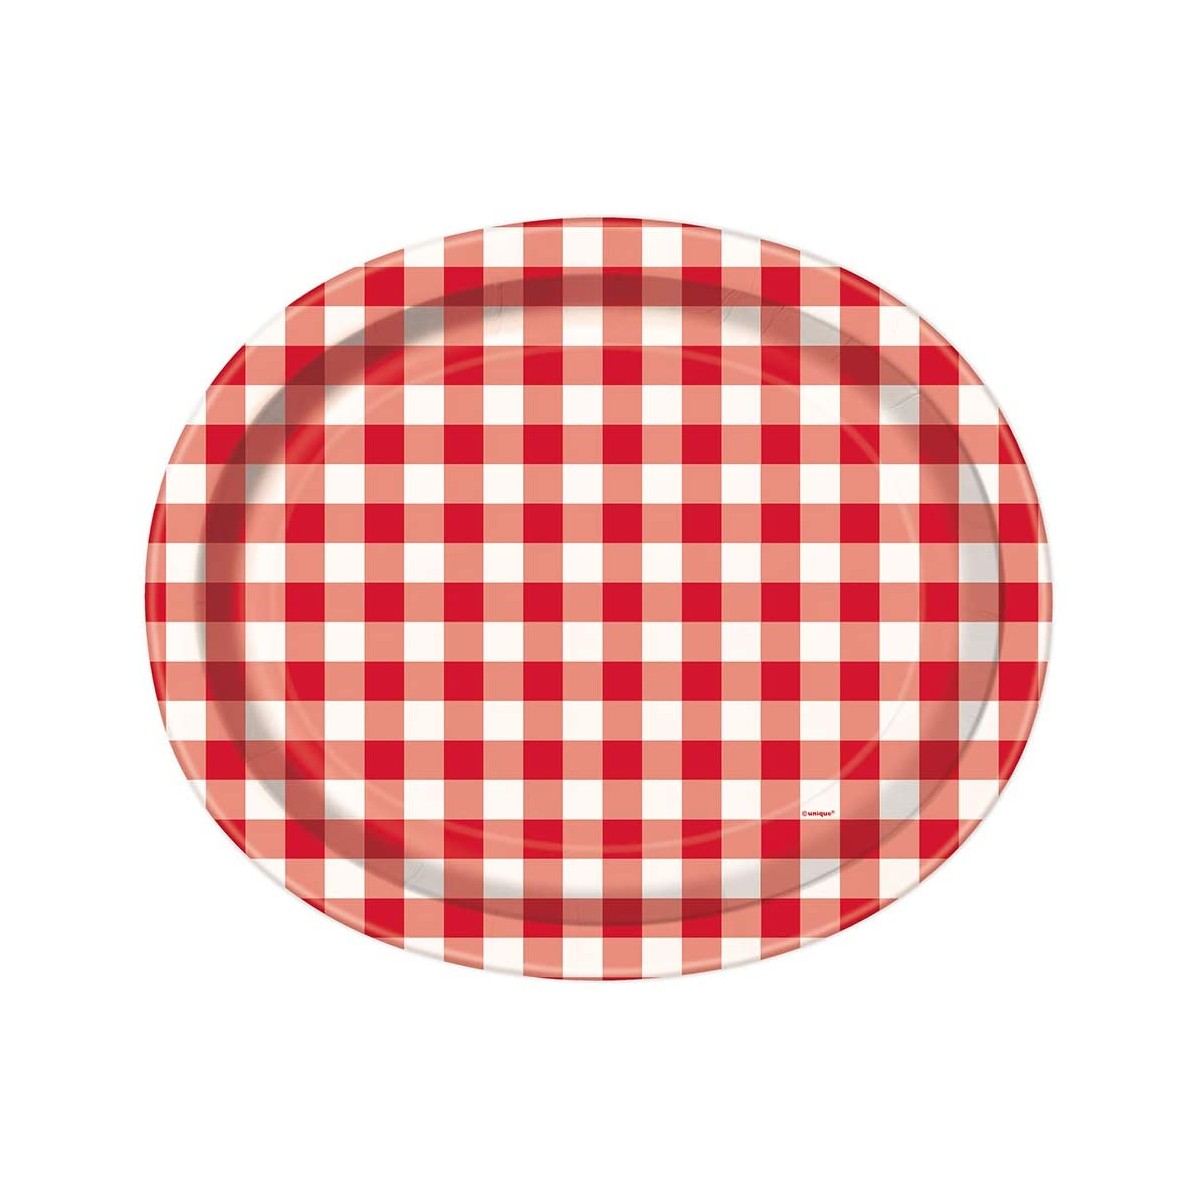 Set da 8 piatti di carta ovali a quadretti rossi, per feste